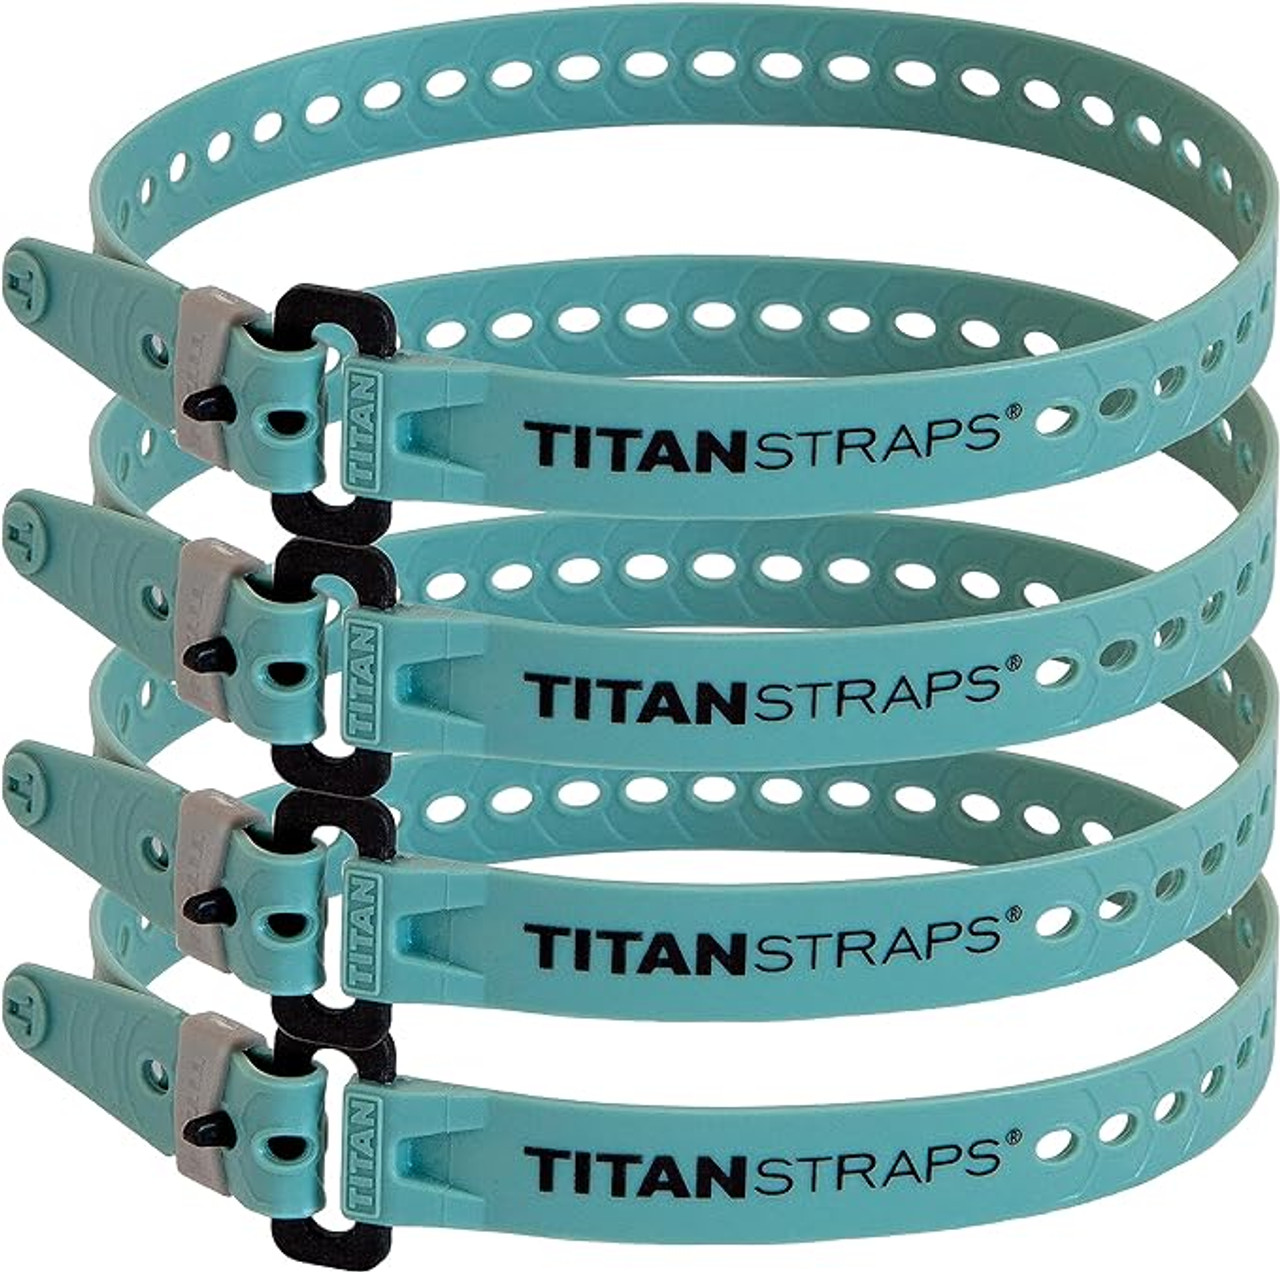 Tiras Titan 4 mini tiras de 15 pol., ardósia (tsm-0515x4-slt)